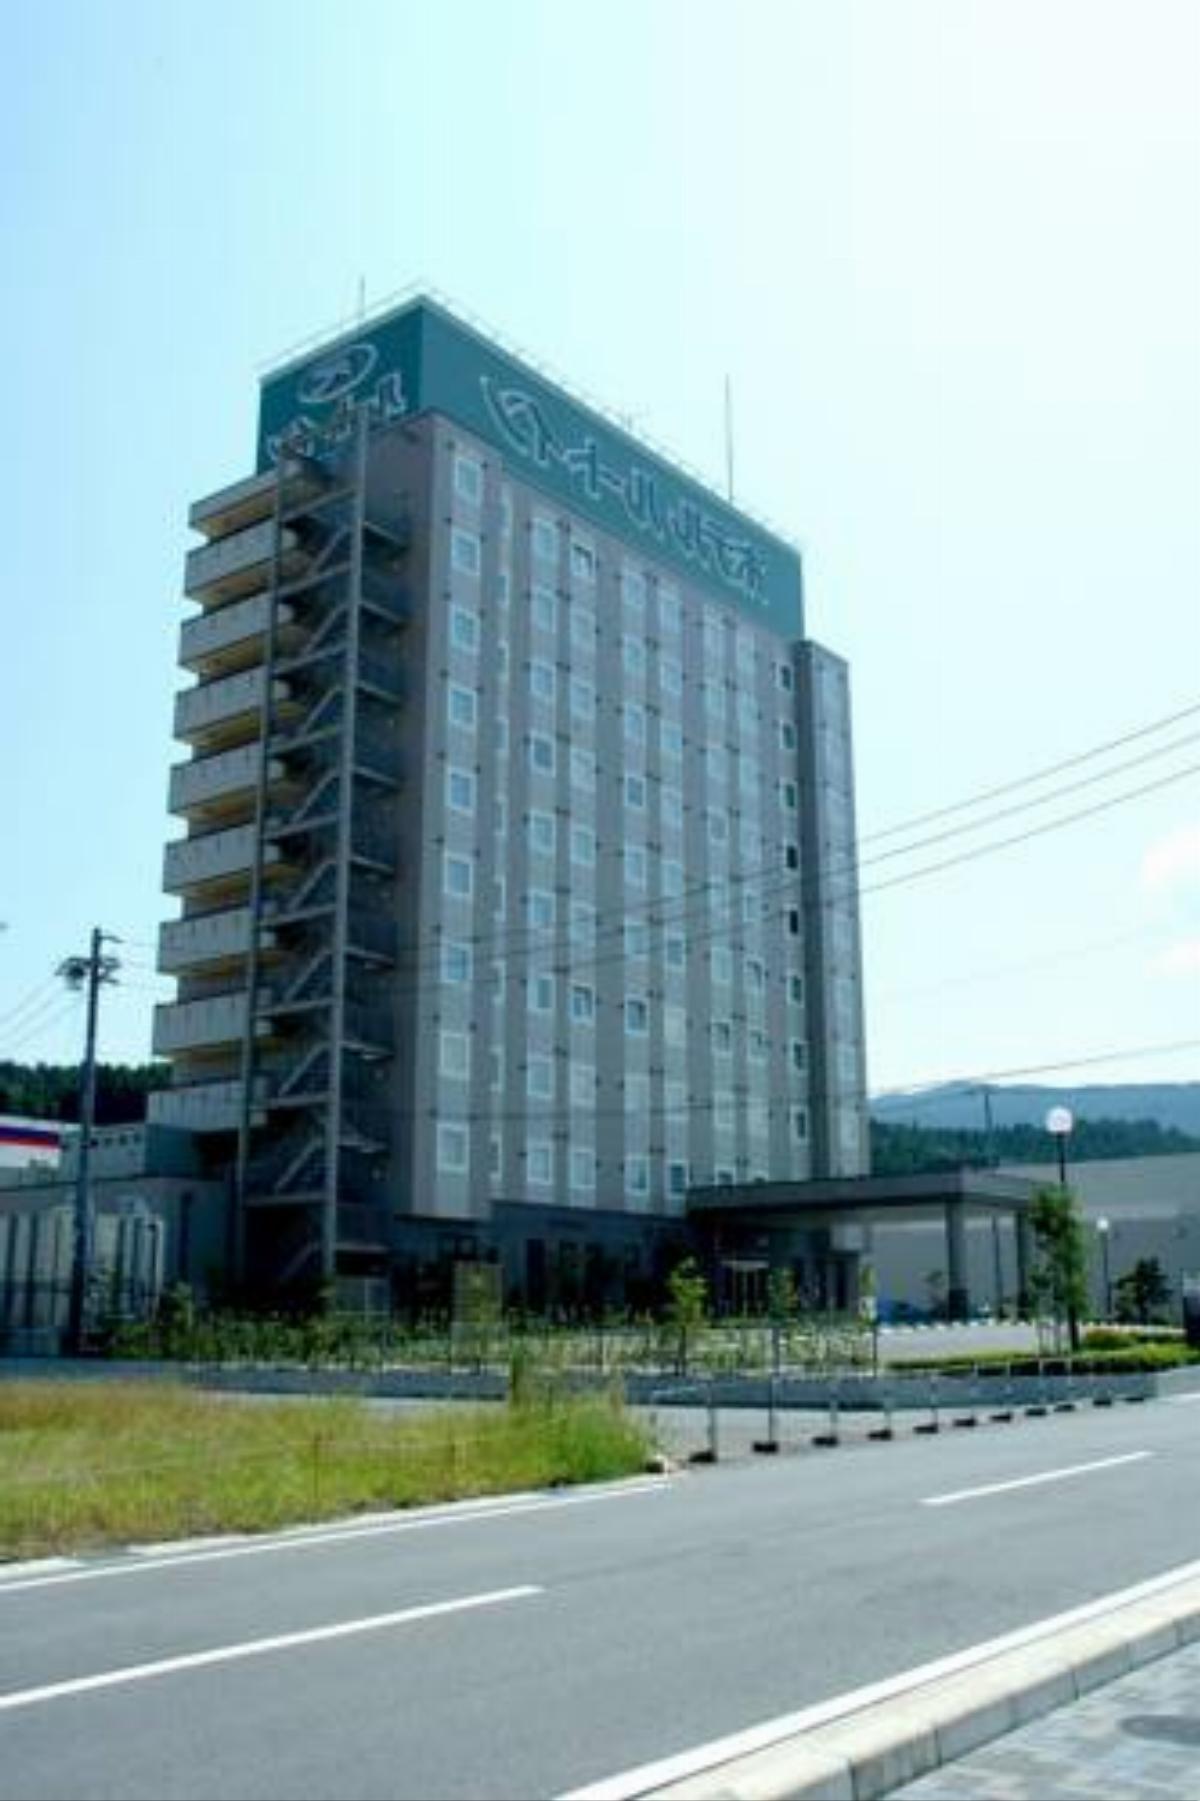 Hotel Route-Inn Ena Hotel Ena Japan